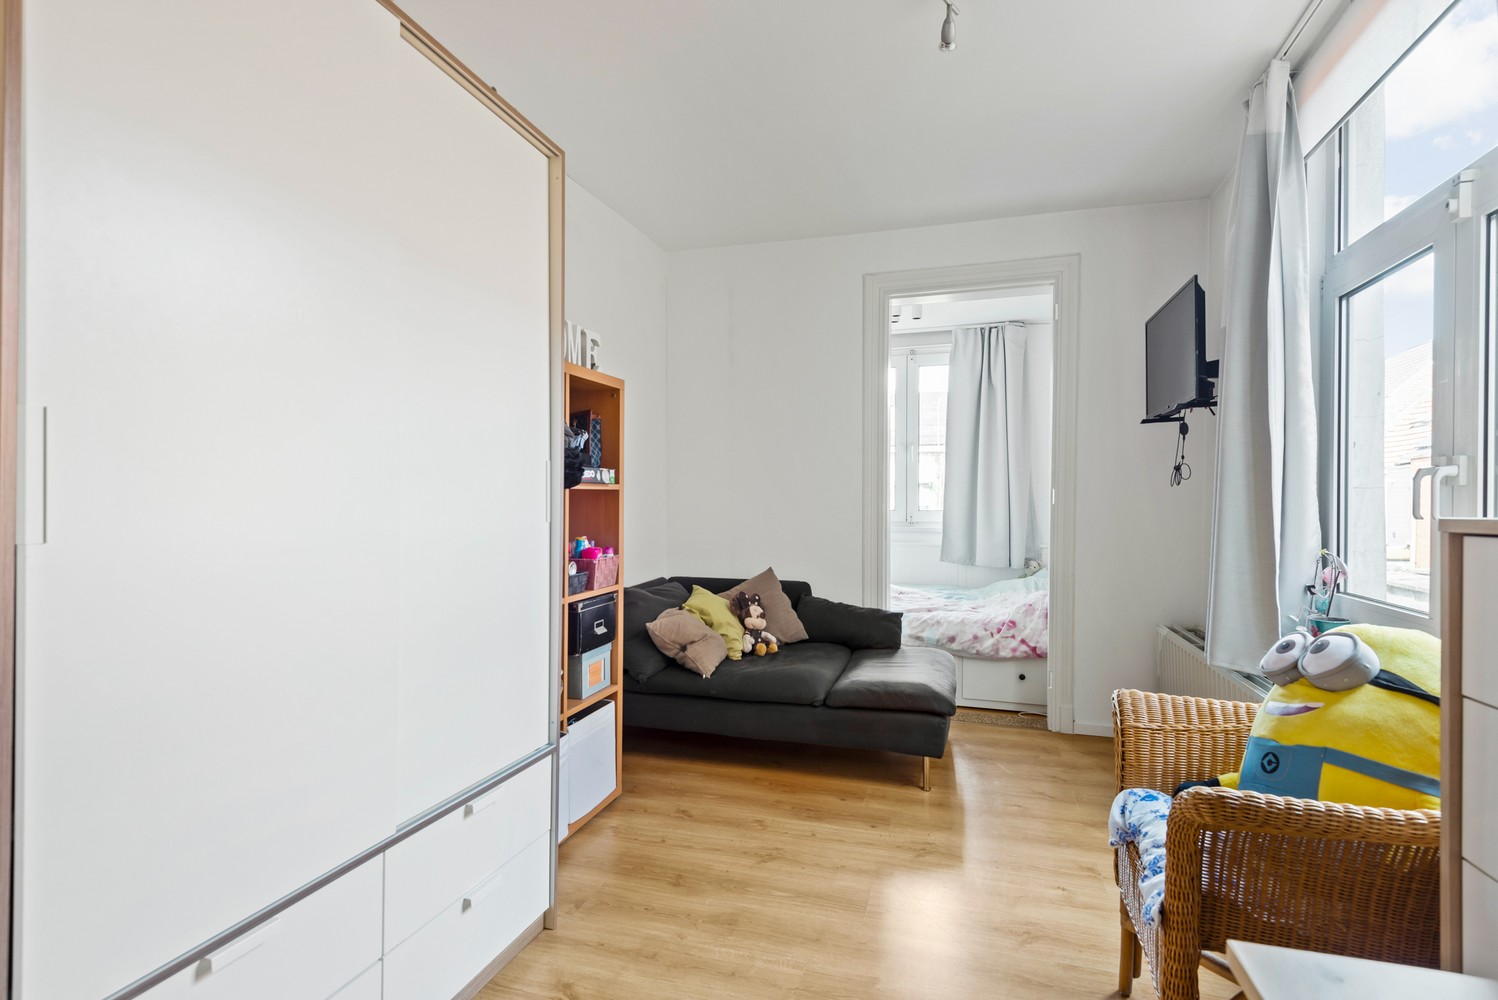 Woning met praktijkruimte op het gelijkvloers en 3 slaapkamers te Deurne afbeelding 16